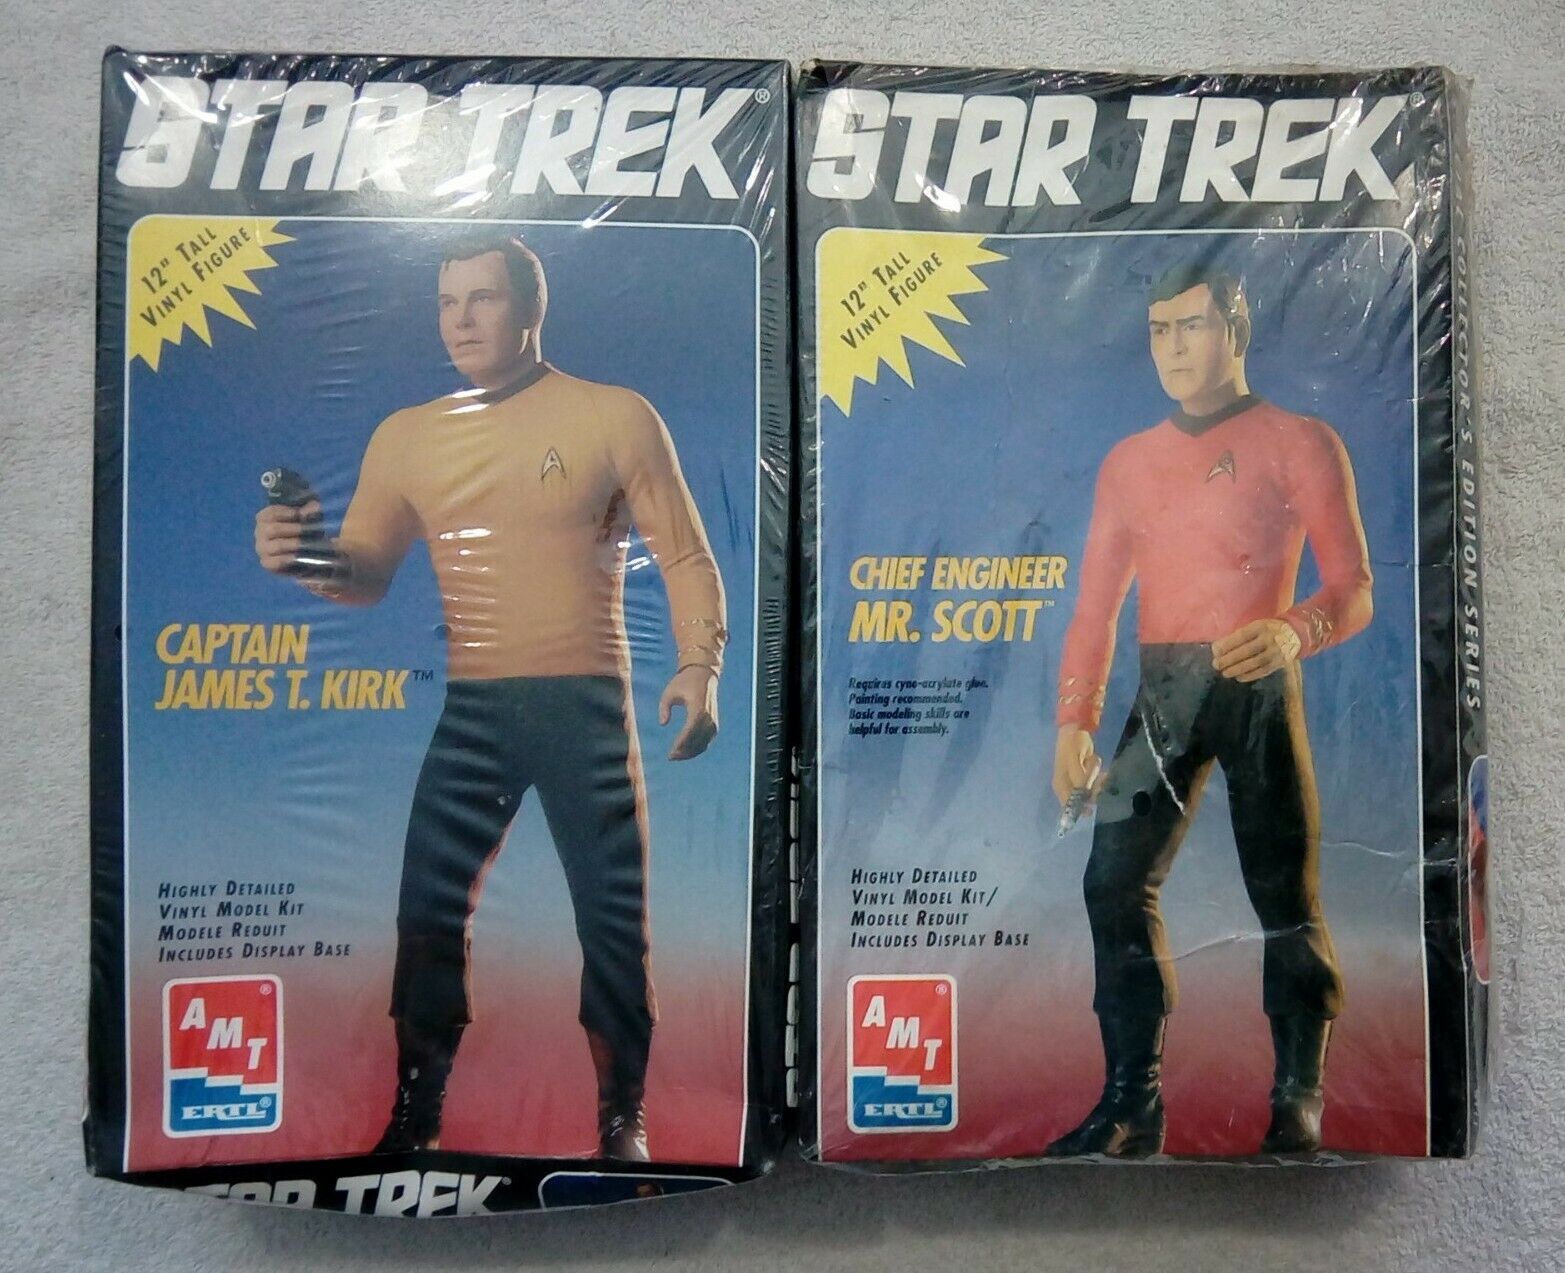 Vintage 90's Star Trek 12" Vinyl Model Figures Capt. Kirk And Mr. Scott Unopened